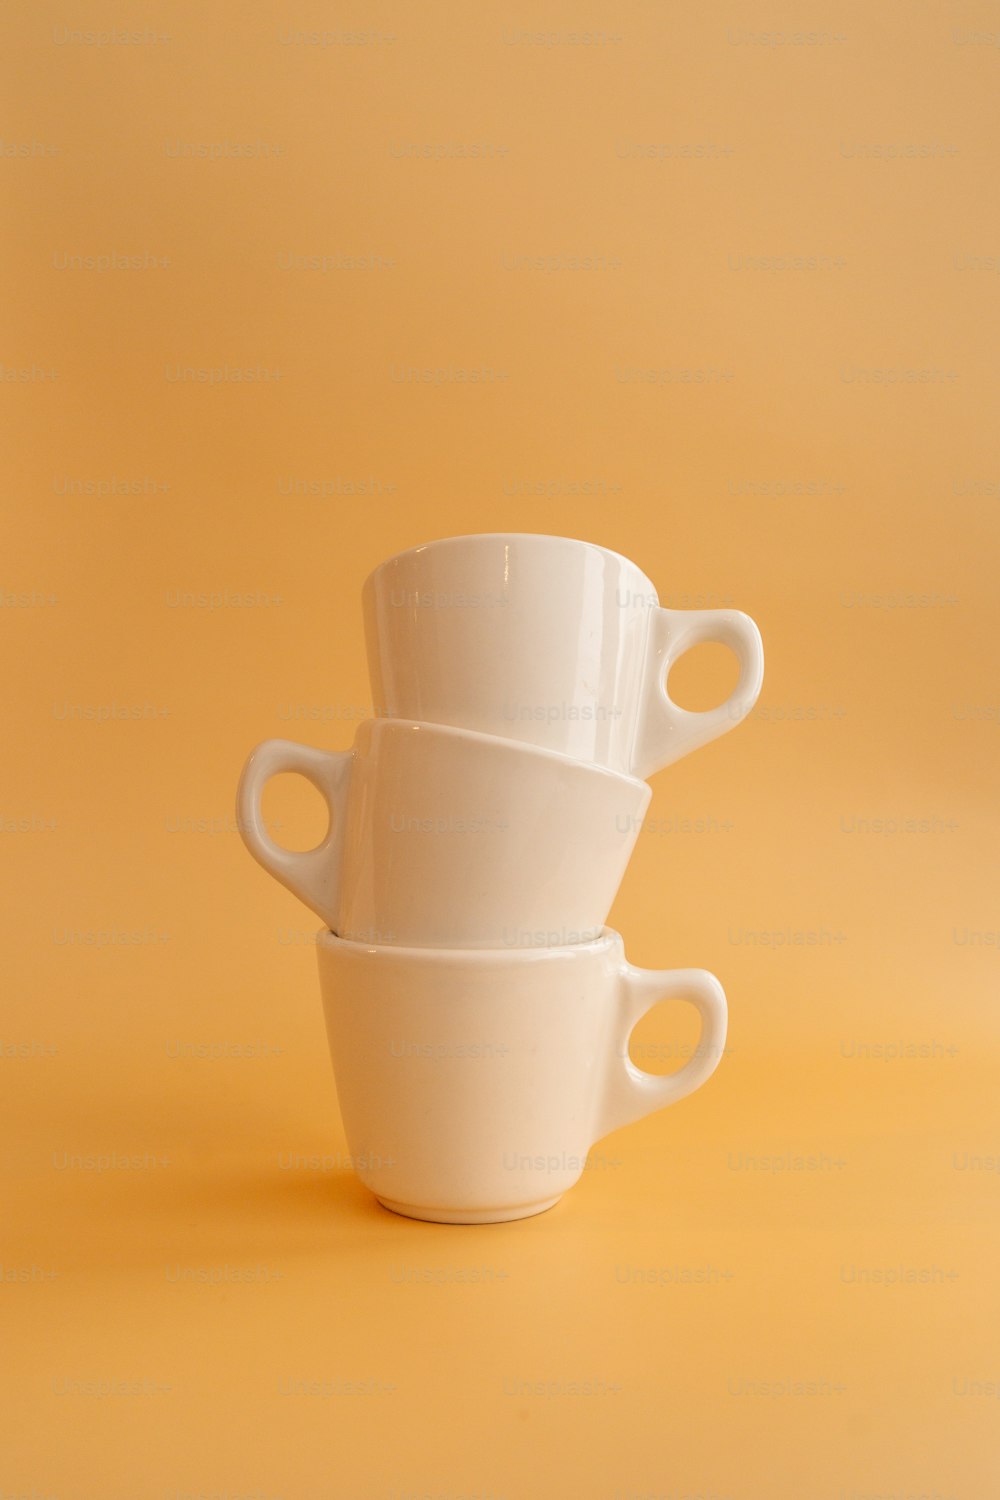 a white teapot on a white surface